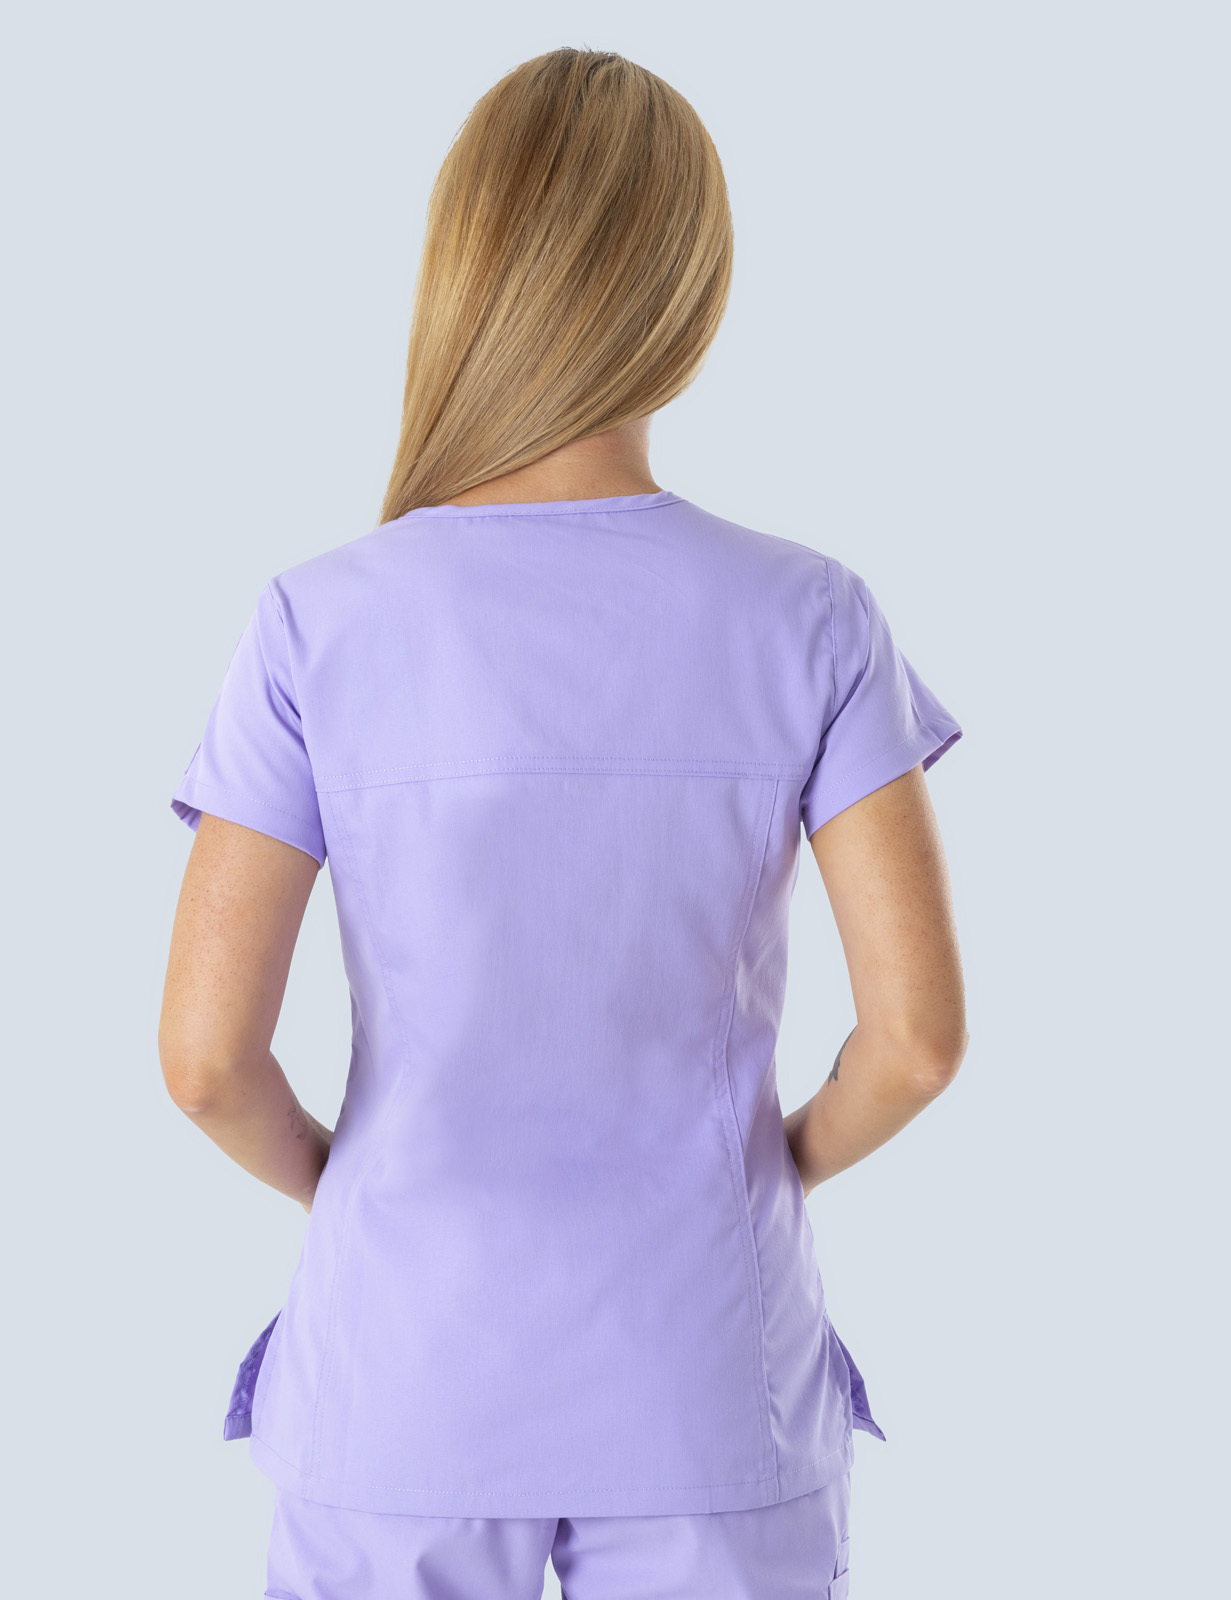 Queensland Children's Hospital Emergency Department Clinical Facilitator Uniform Top Bundle  (Women's Fit Top in Lilac incl Logos)